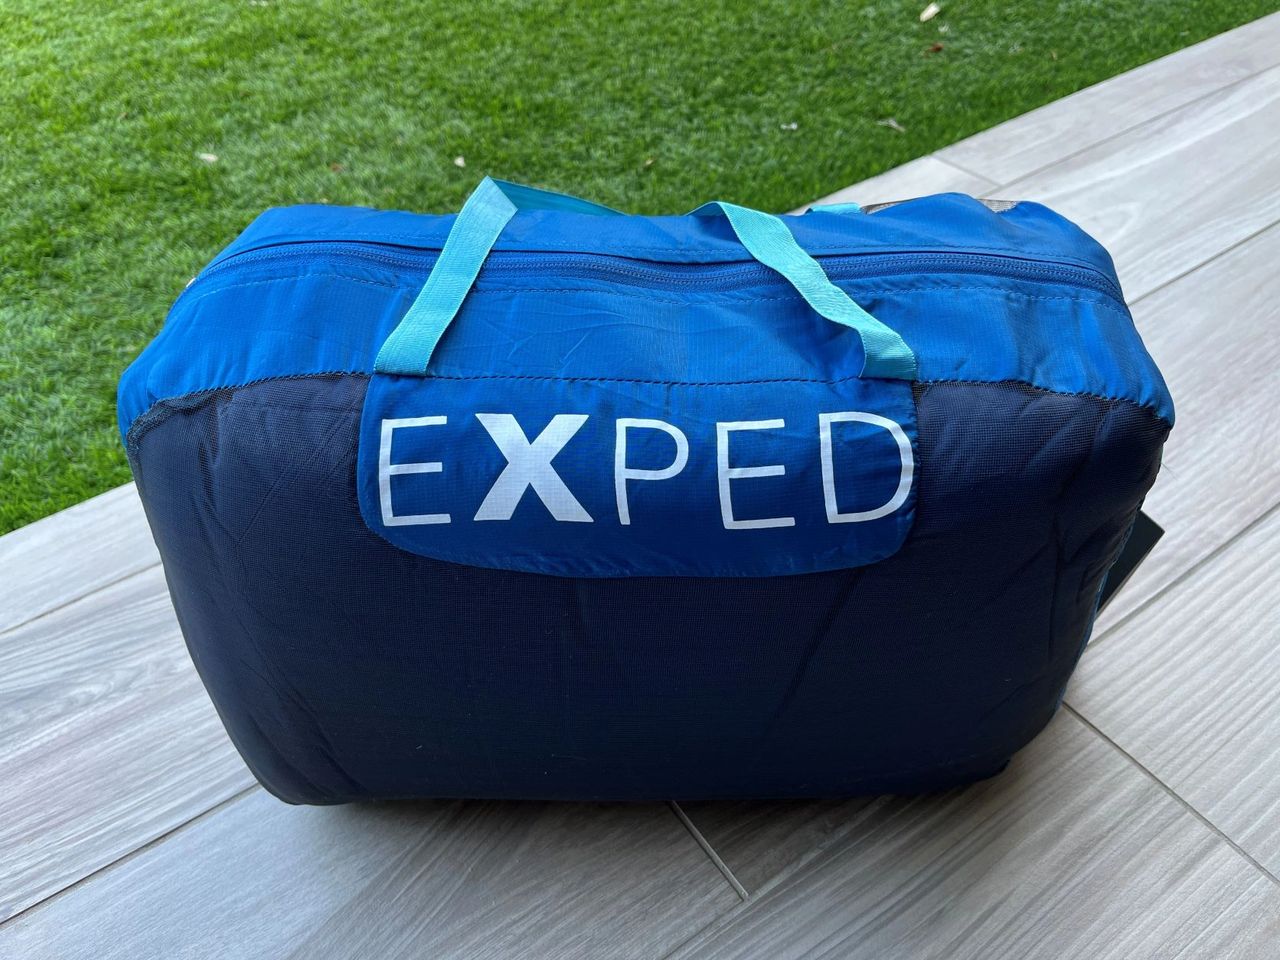 Sleeping Bag - Gear review of EXPED Megasleep 25/40